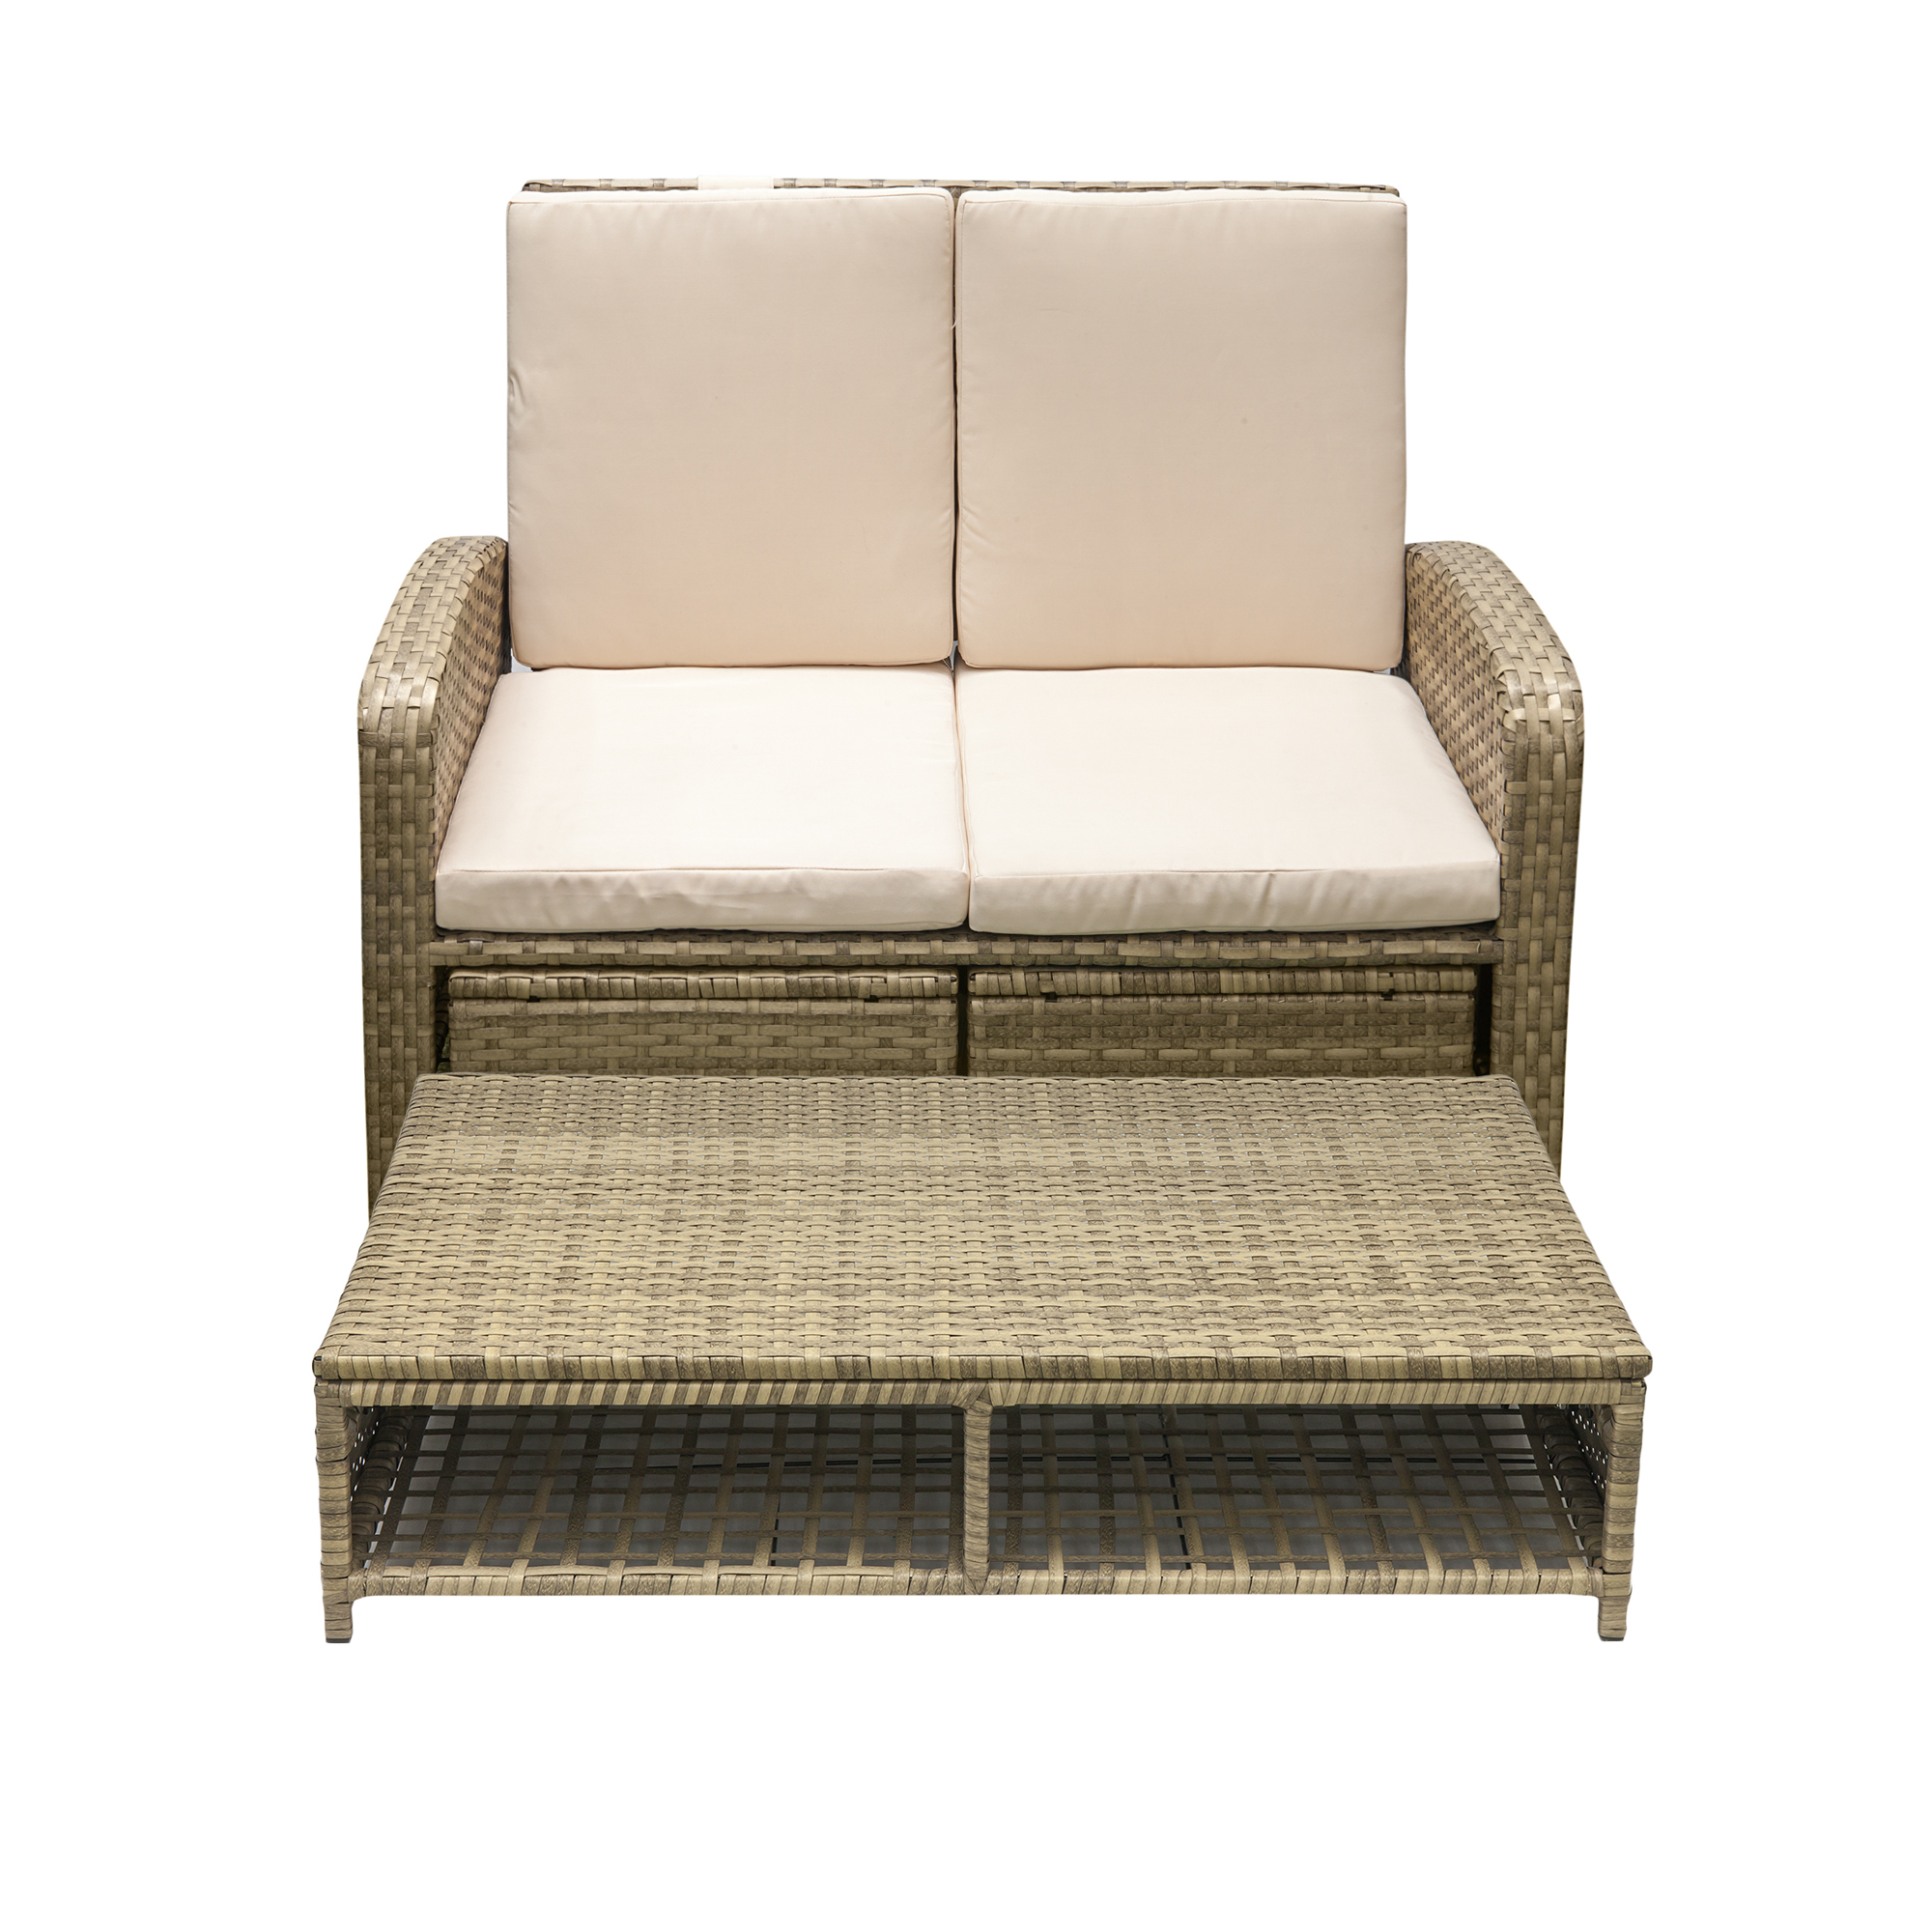 Комплект мебели Jlip (S3223B/S3223A/S3223C), цвет бежевый, молочный (подушки), размер 116 х 73 х 91 см - фото 1